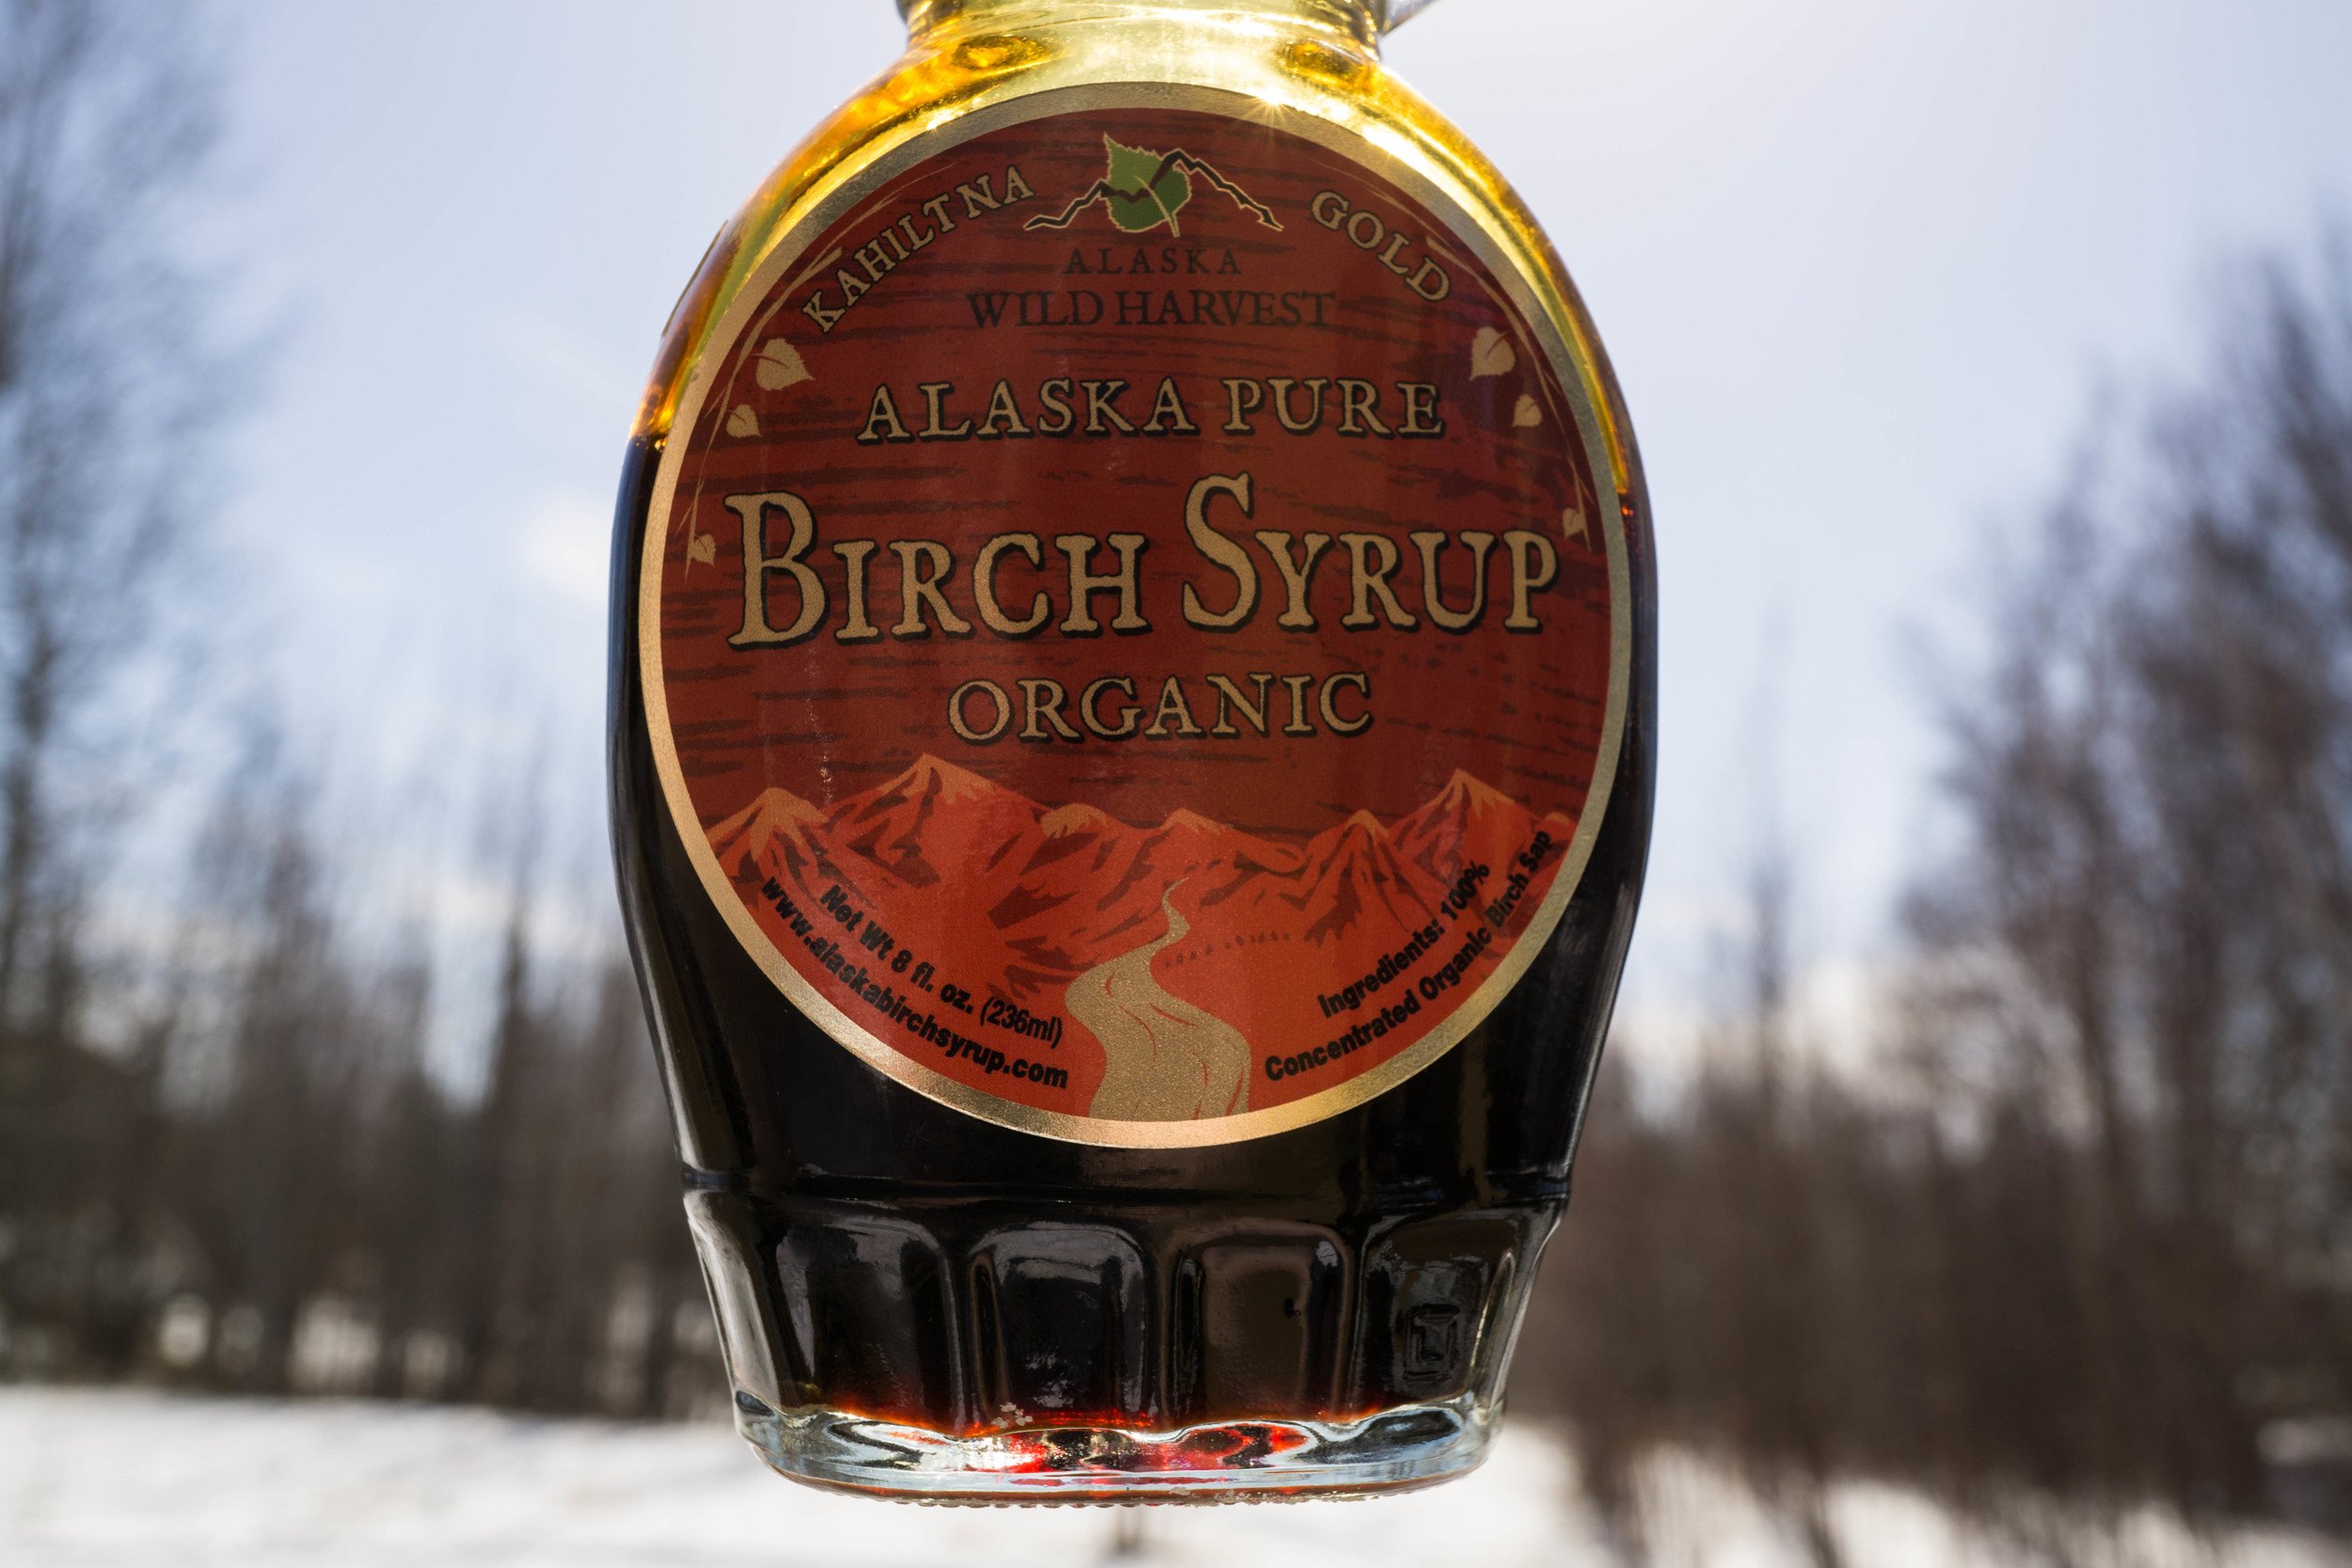 Homemade barbecue sauce secret Alaskan ingredient: Birch Syrup